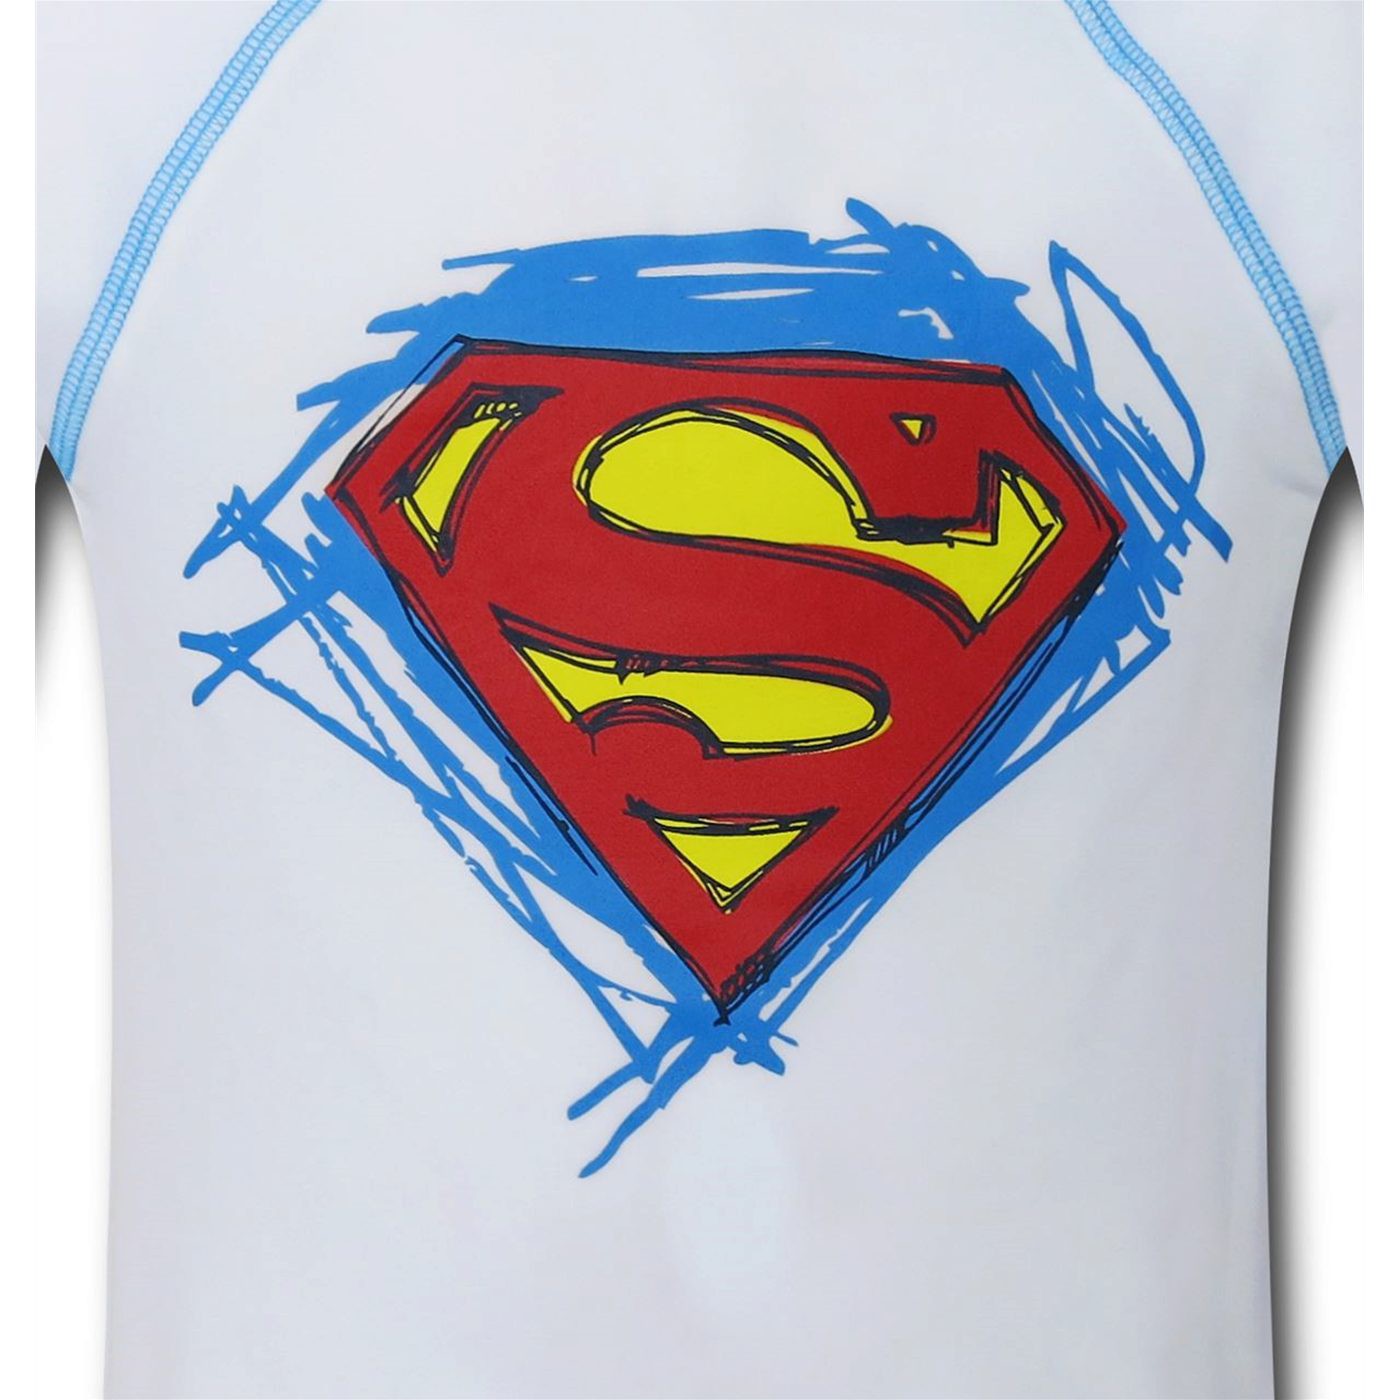 Superman Symbol Kids Rash Guard